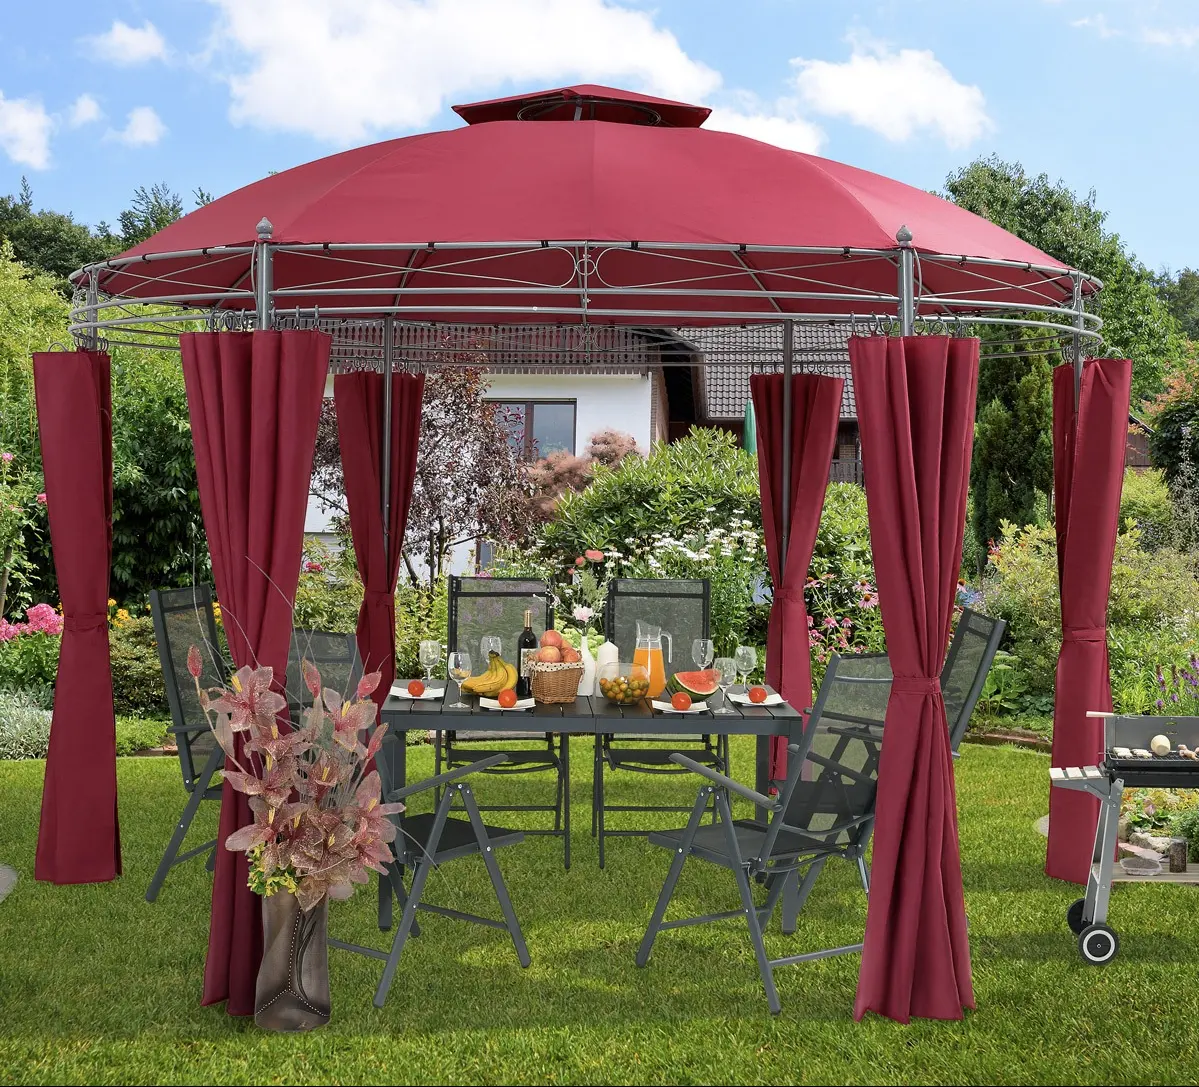 A028 Luxury Outdoor shed gazebo Wedding Party Garden Gazebo outdoor tent